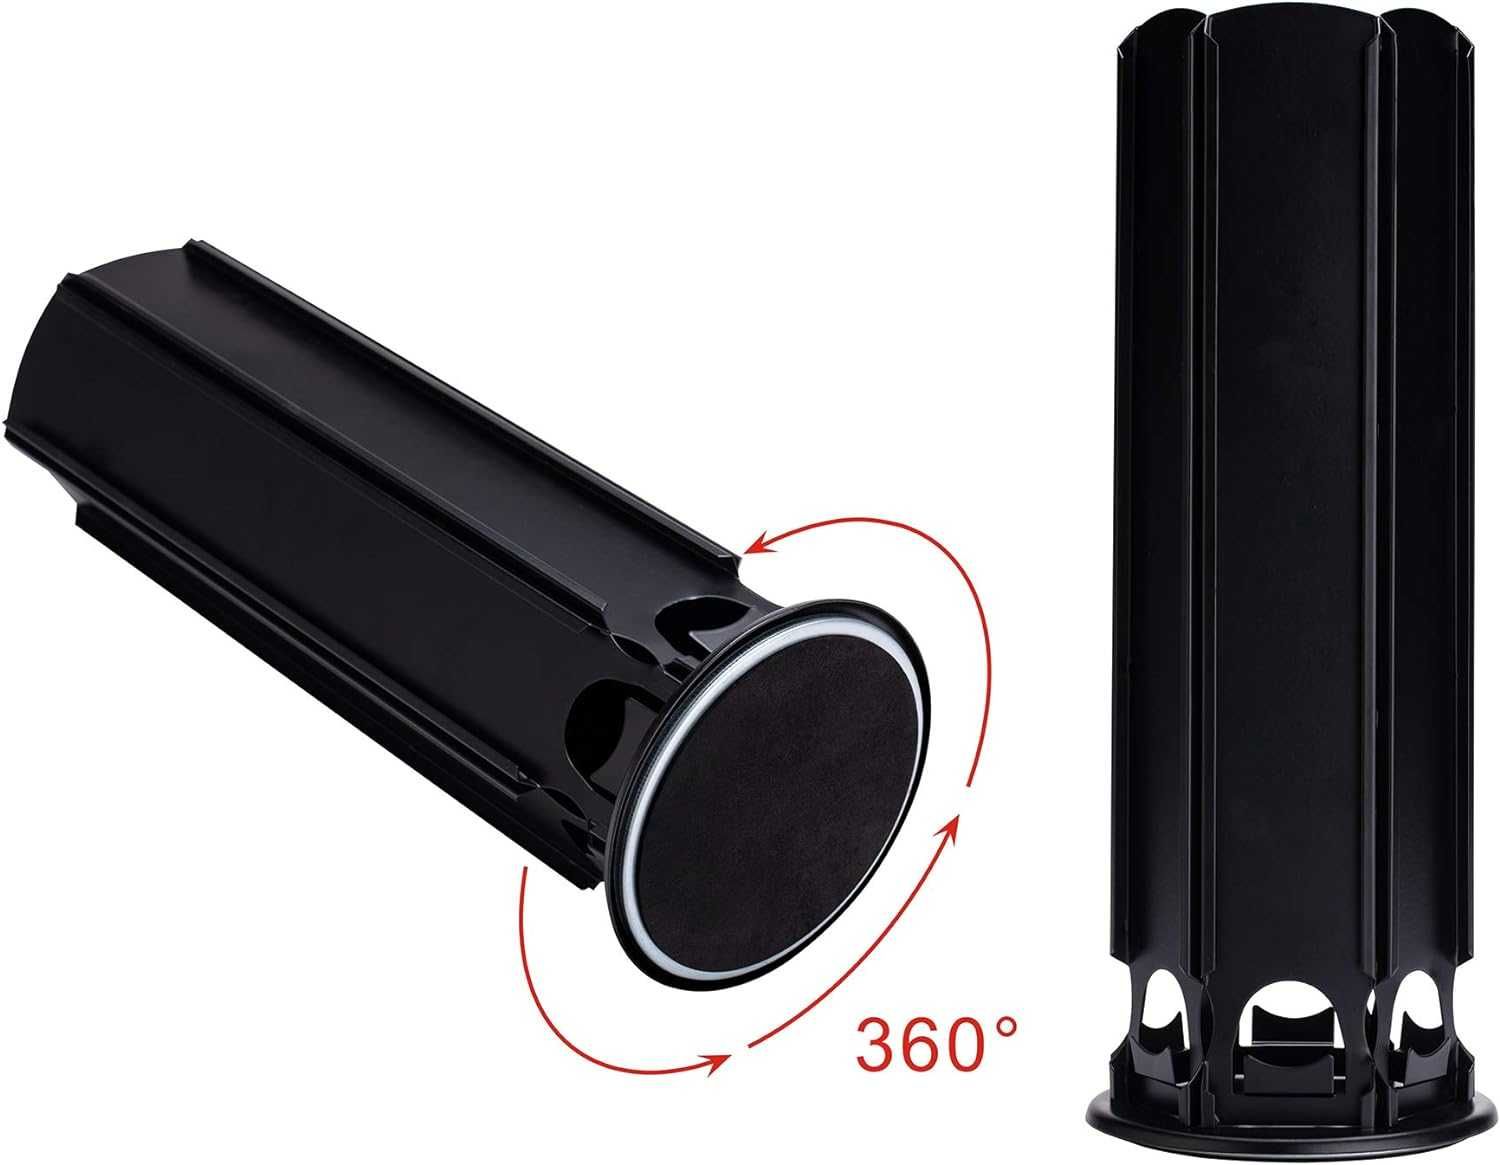 Suport rotativ pentru 50+ capsule Nespresso Vertuoline in negru